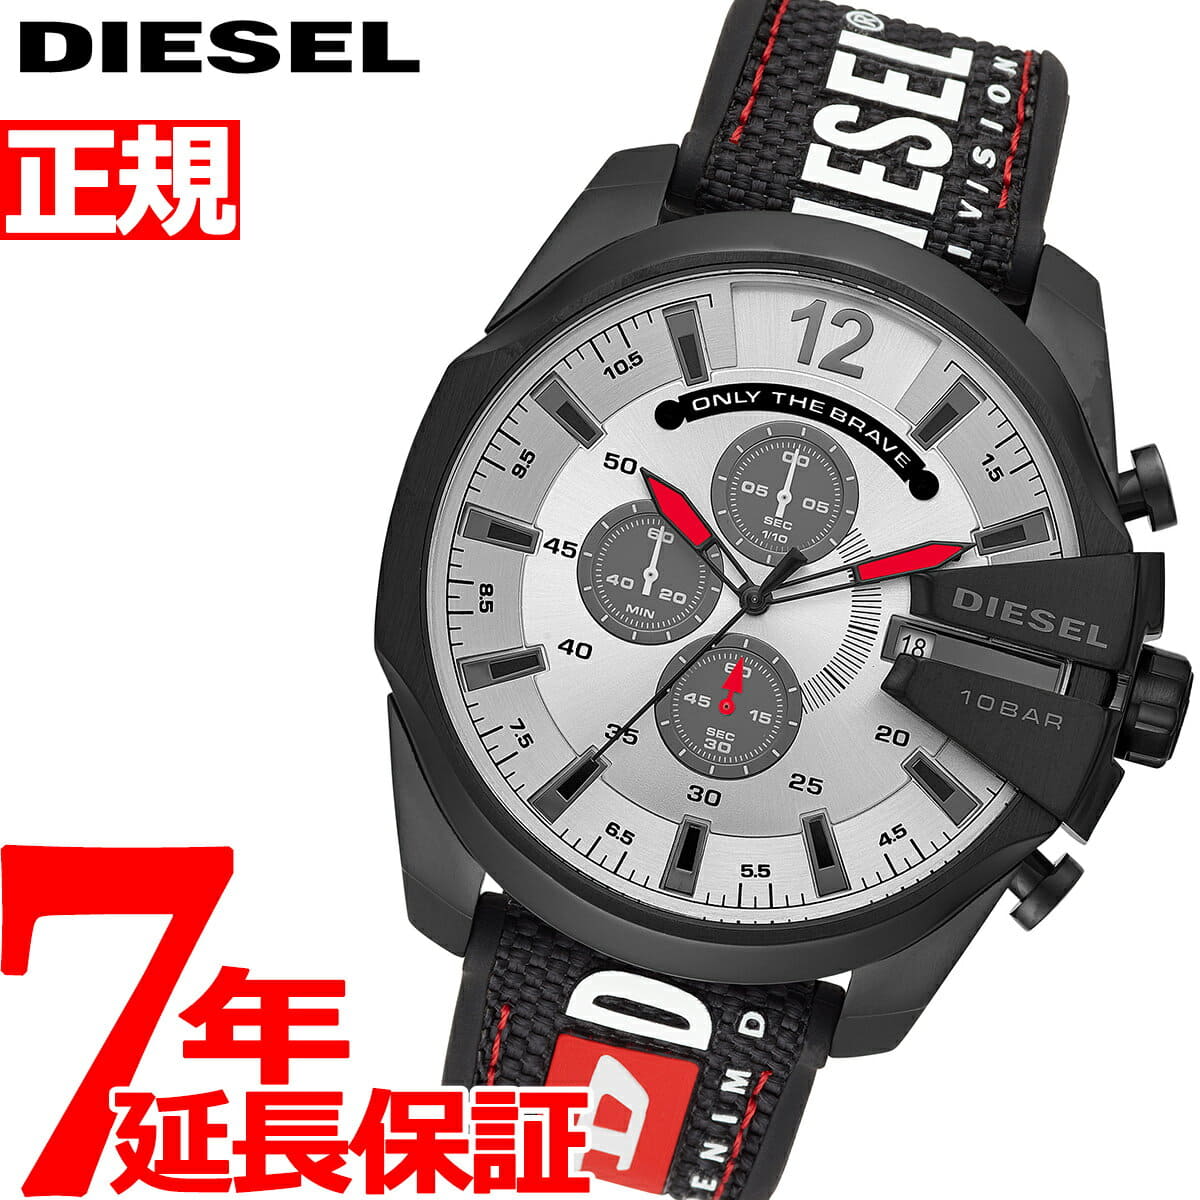 FORWARD DIESEL MEGA chief mega new chronograph [2019 Store - men watch works] DZ4512 BE CHIEF New]Diesel